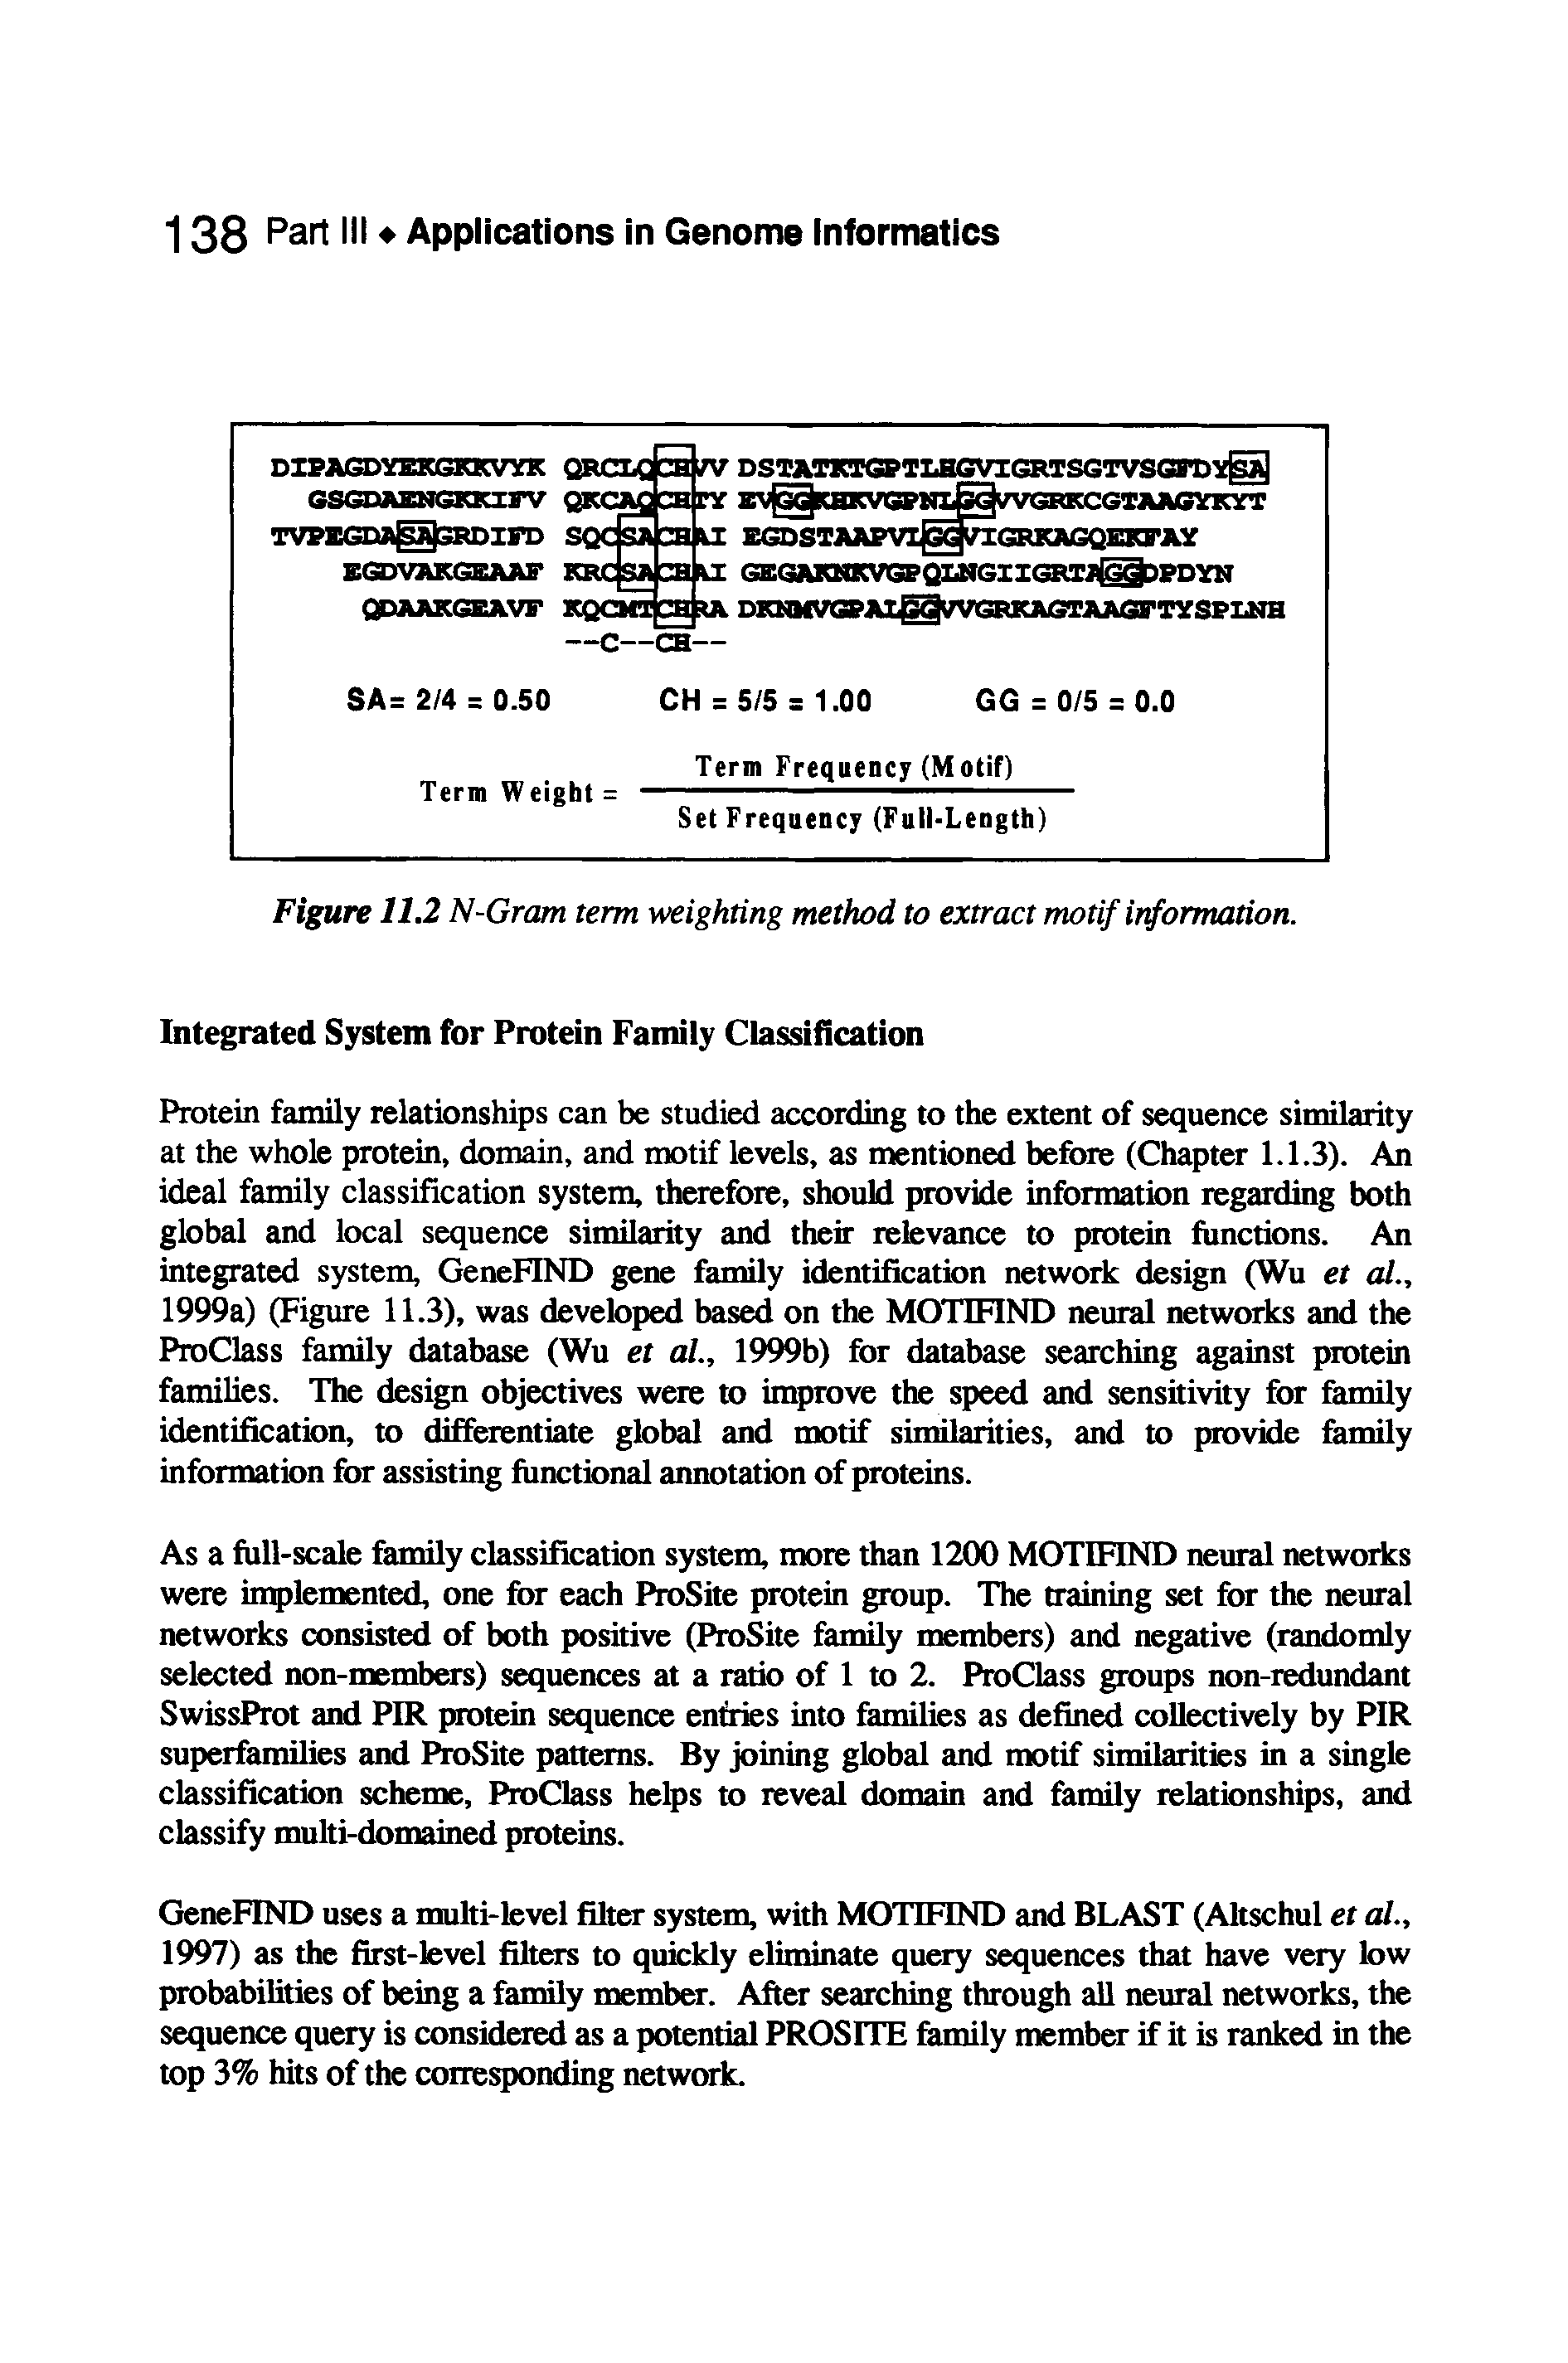 Figure 11.2 N-Gram term weighting method to extract motif information.